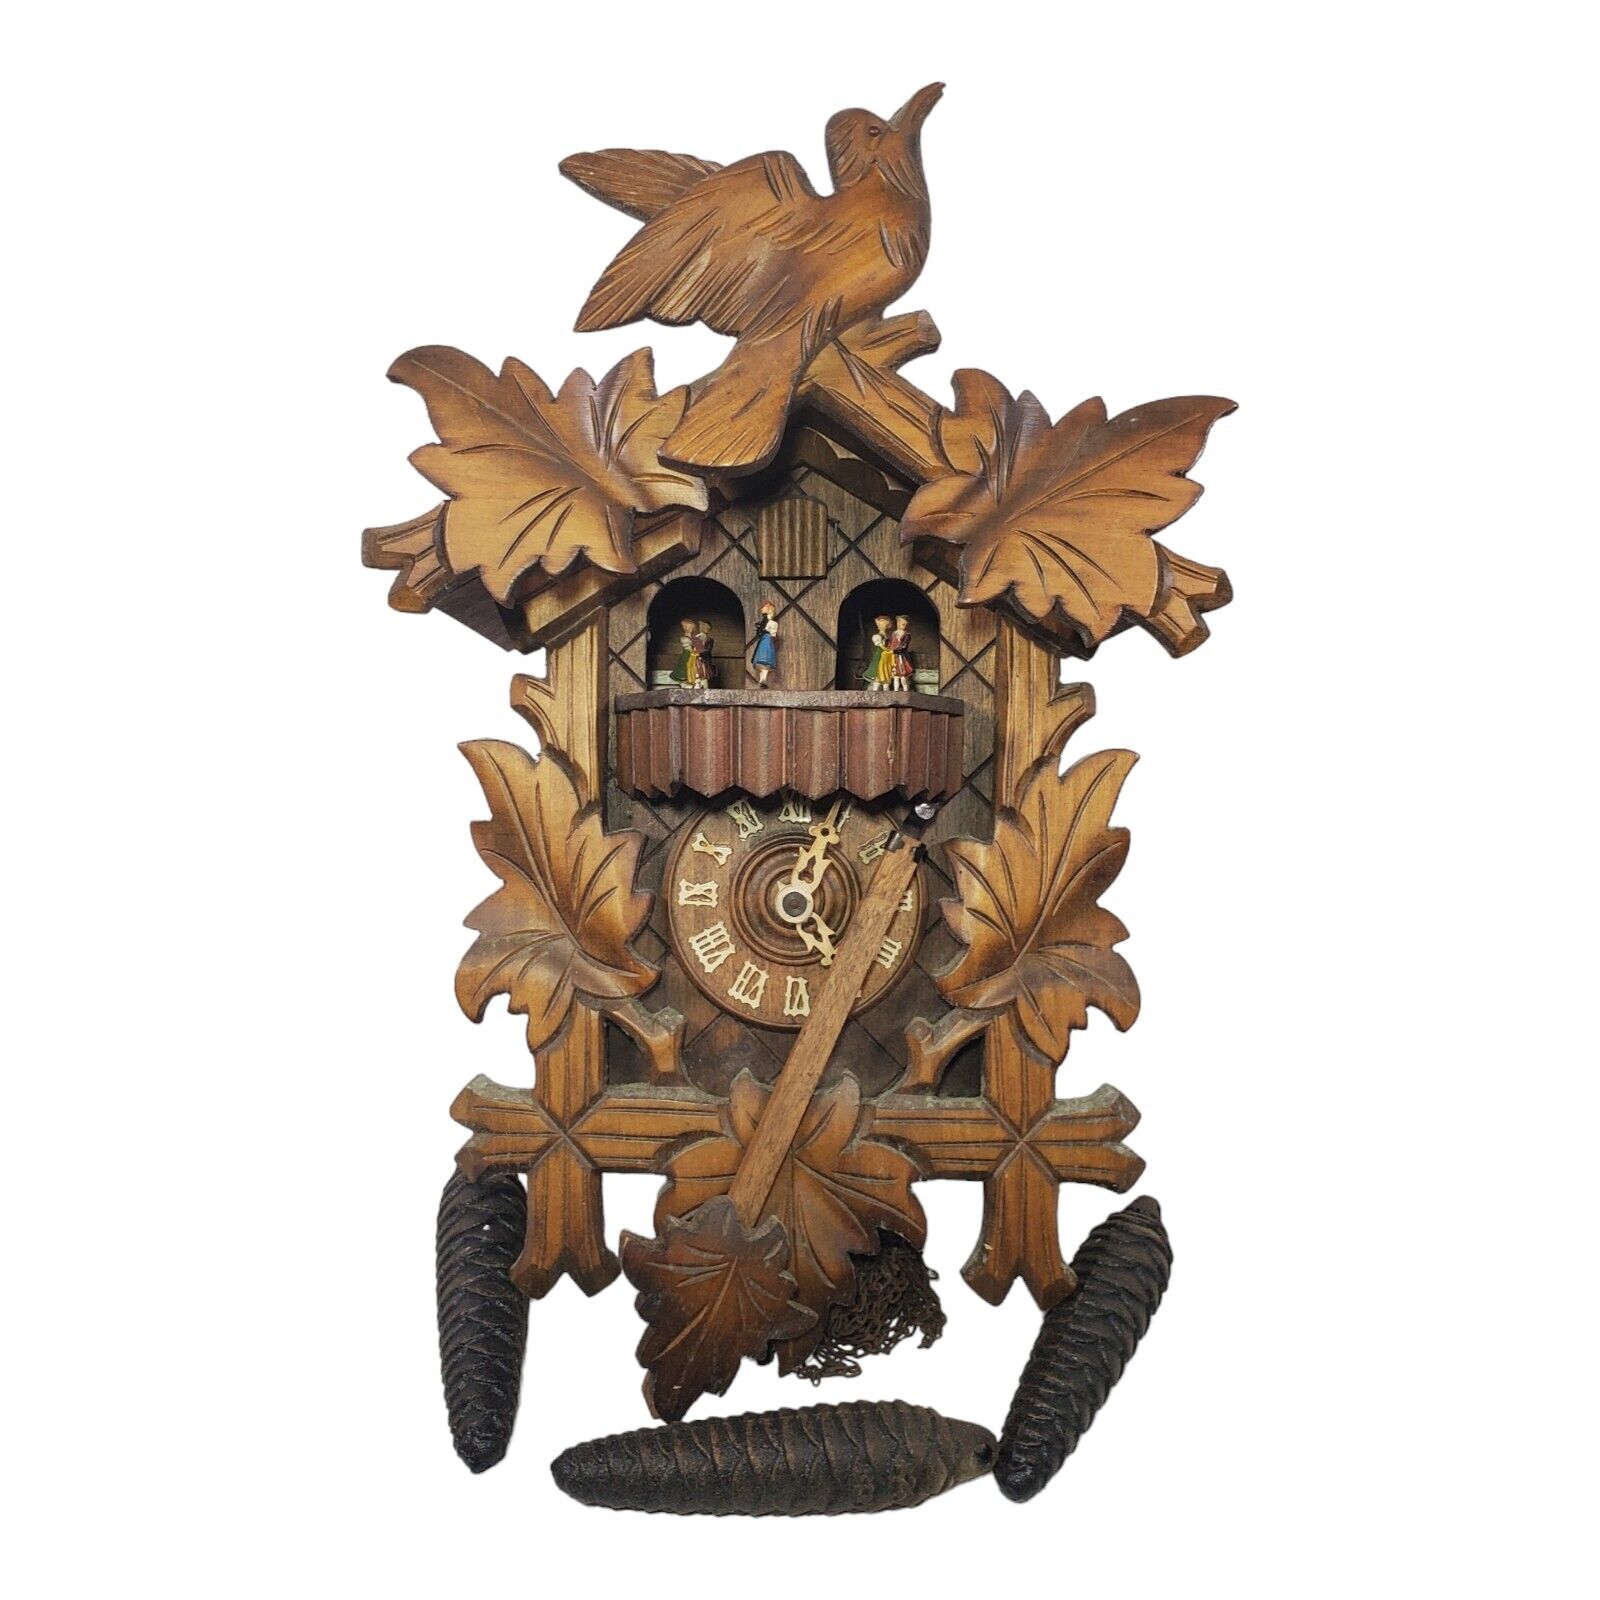 Vintage German Black Forest Cuckoo Clock Regula A25-83 Carousel Movement Musical